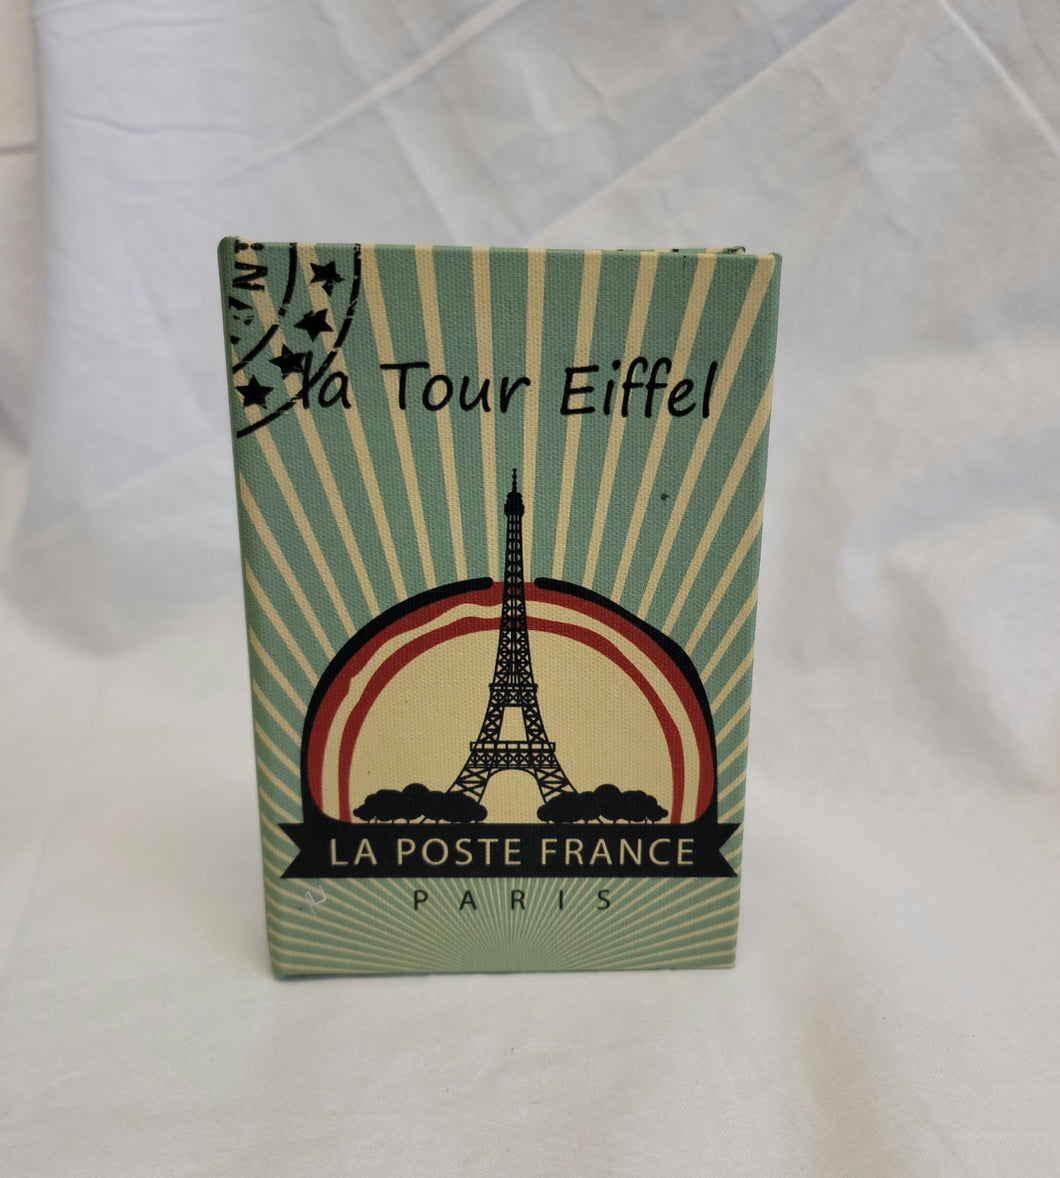 Storage Book-La Tour Eiffel